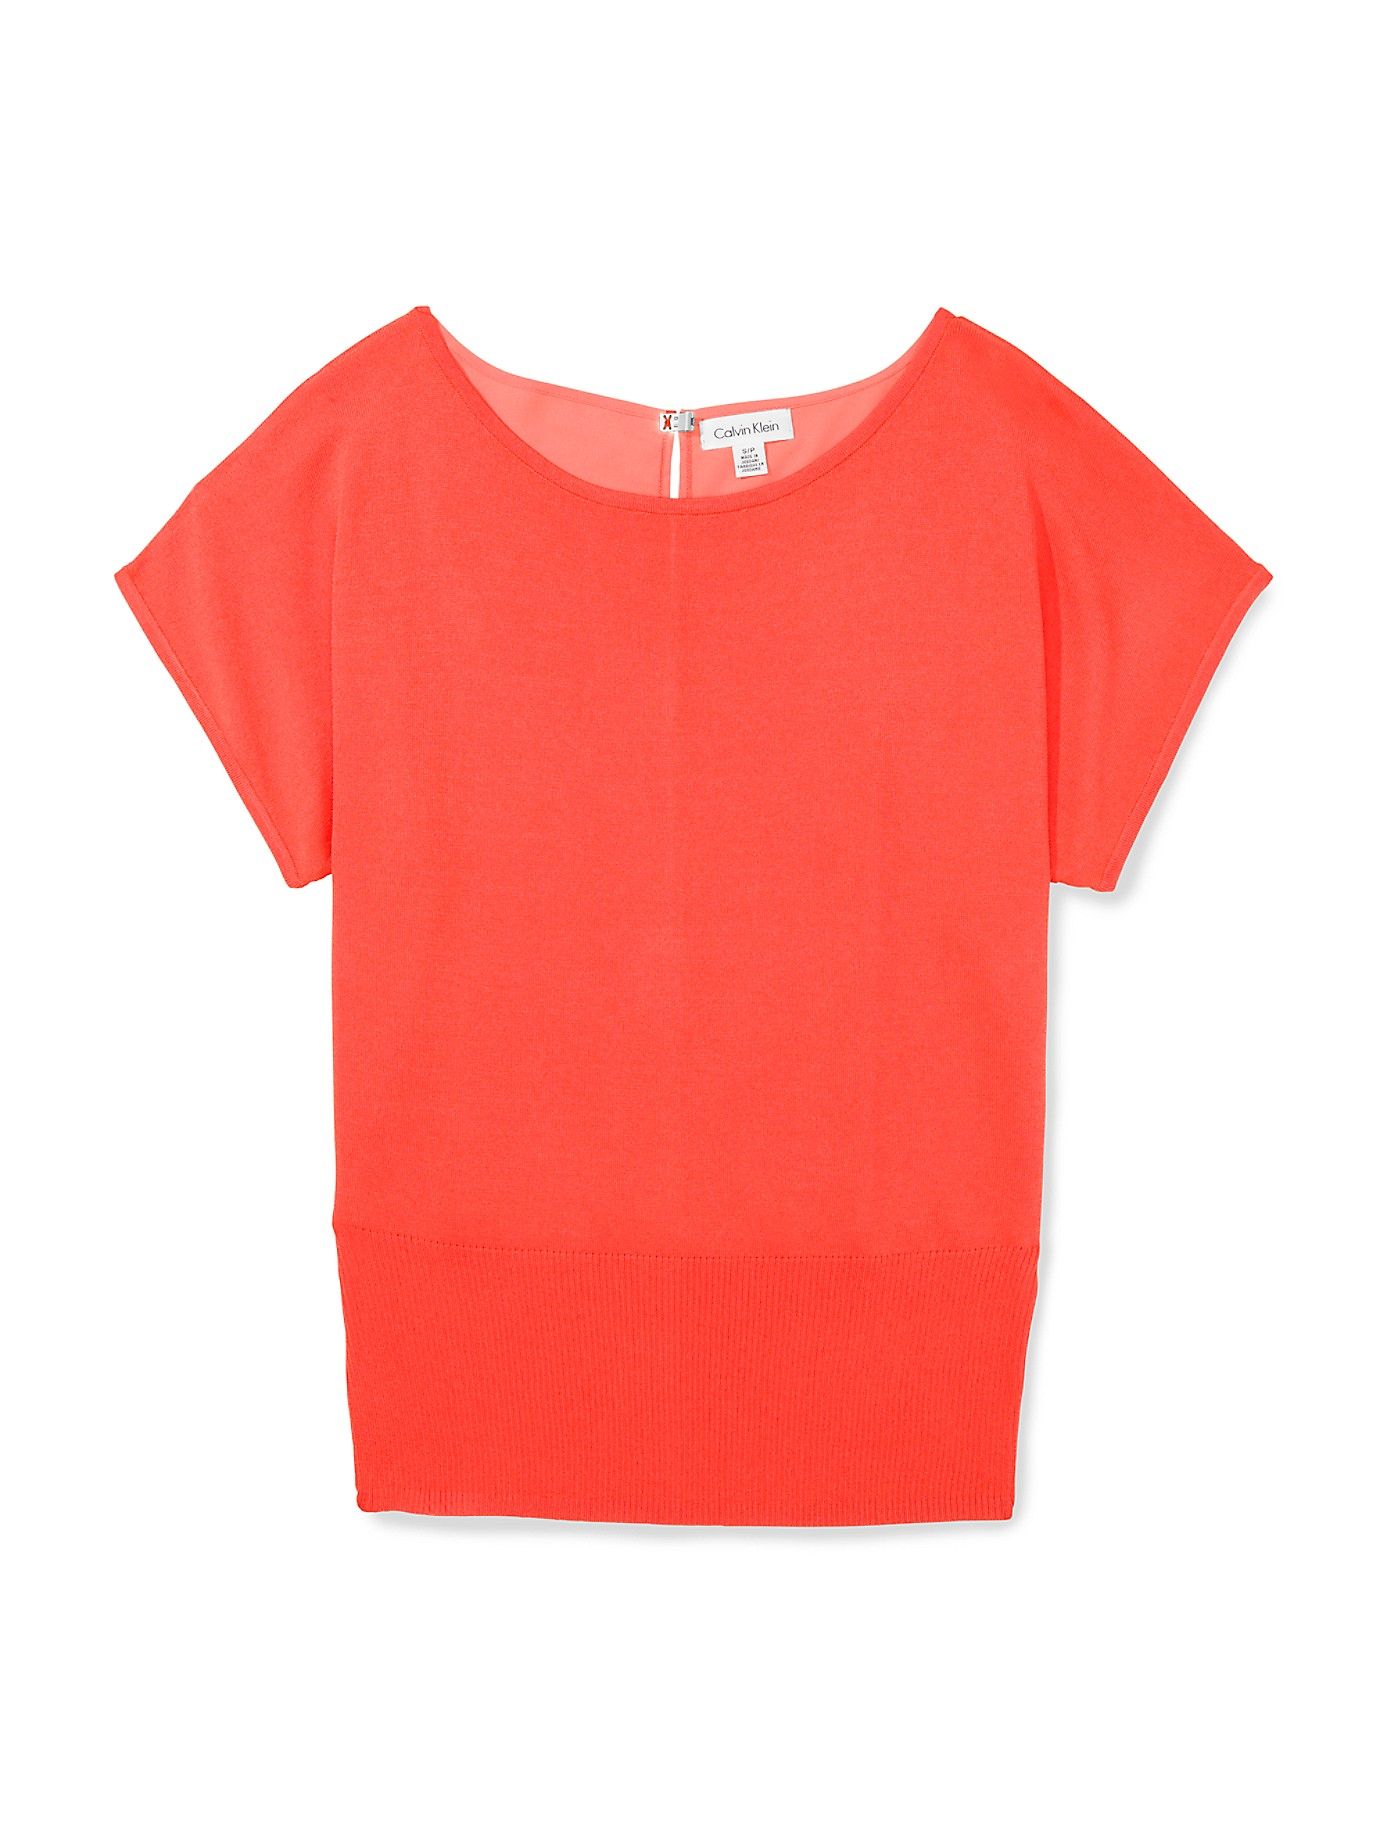 Lyst - Calvin Klein Banded Hem Dolman Sleeve Top in Orange